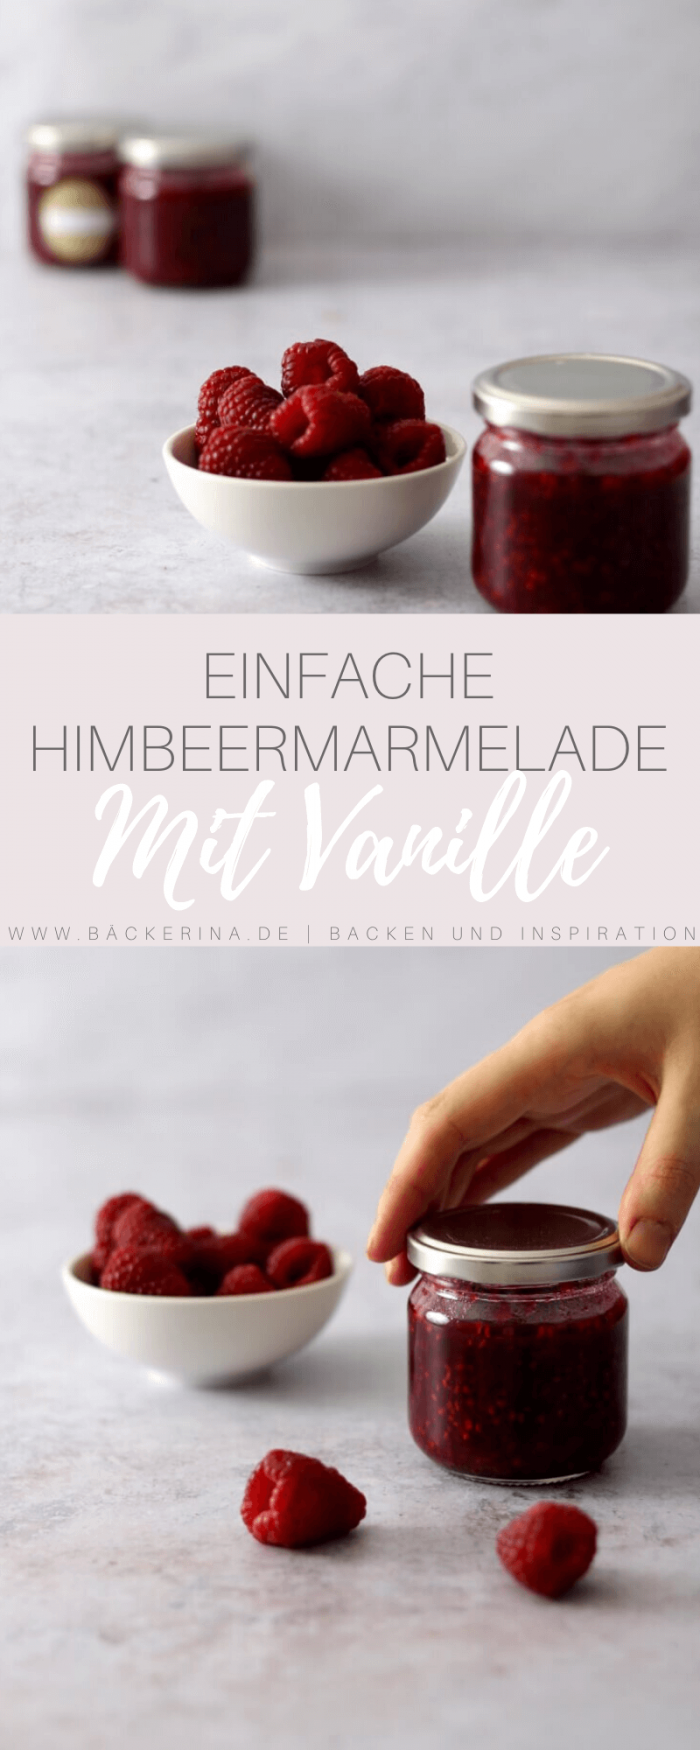 Traumhafte Himbeermarmelade mit Vanille - Bäckerina